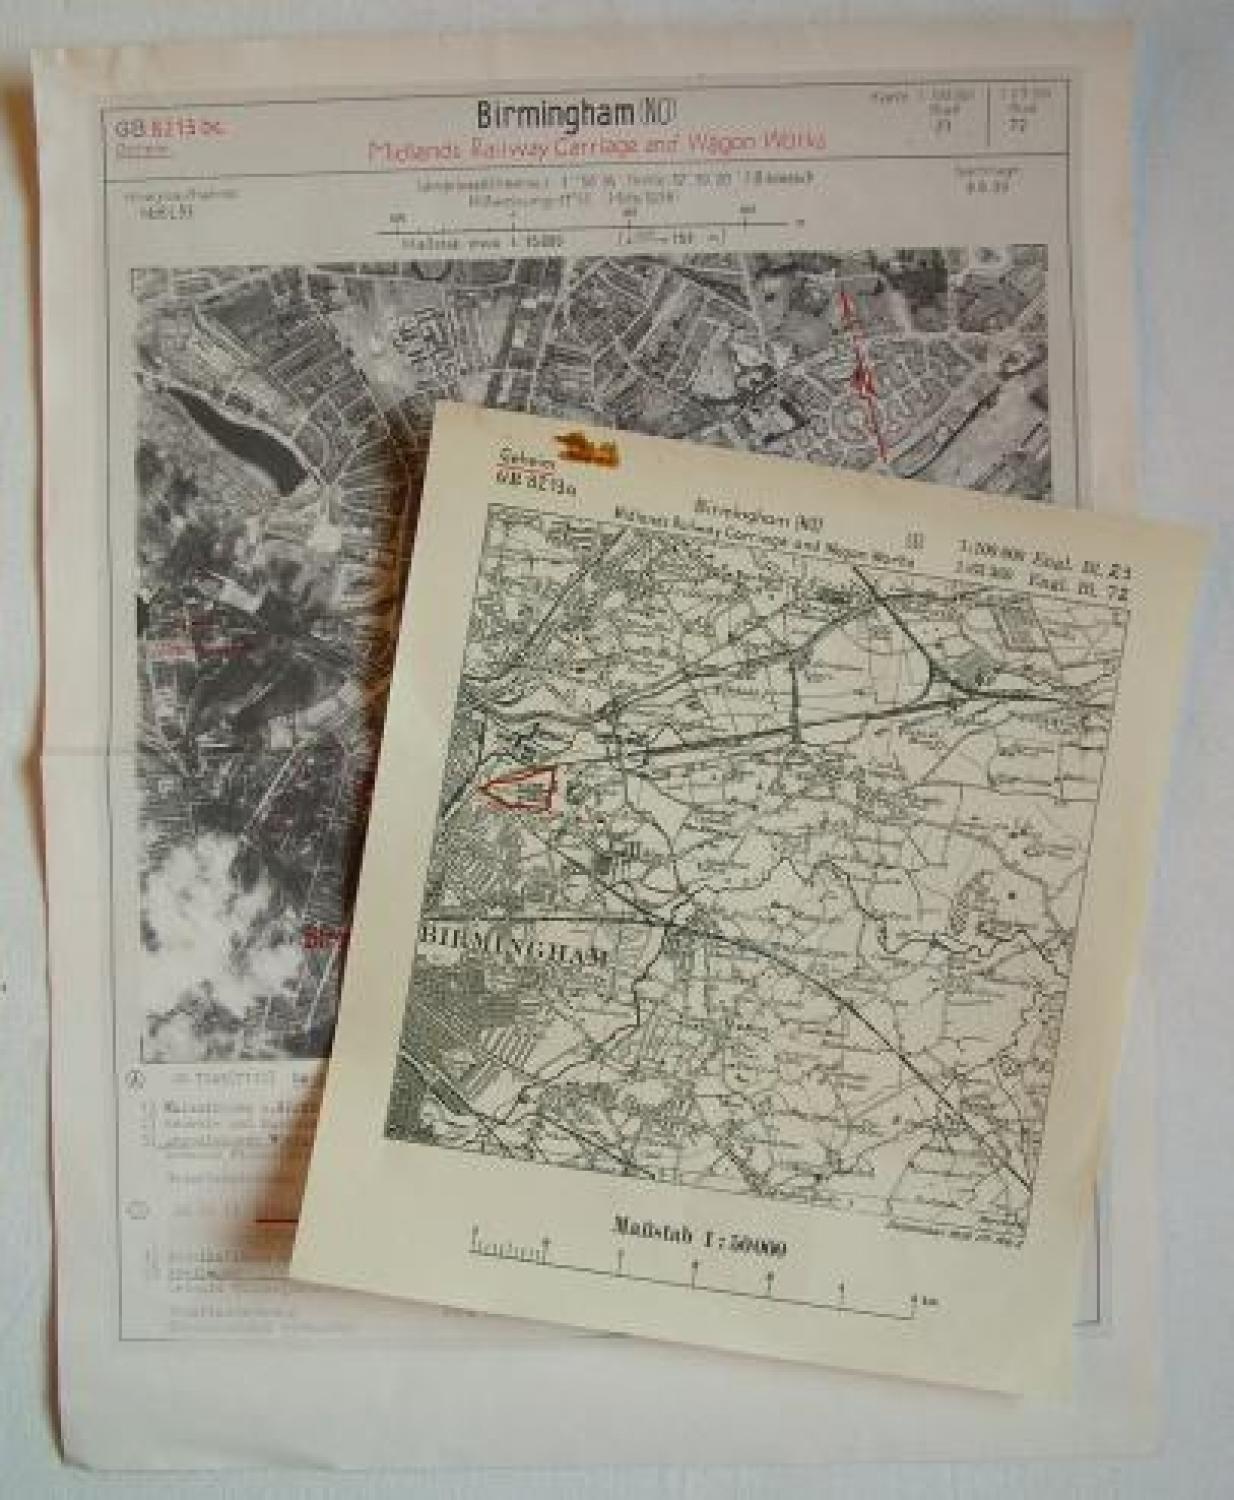 Luftwaffe Target Maps/Documents - Birmingham